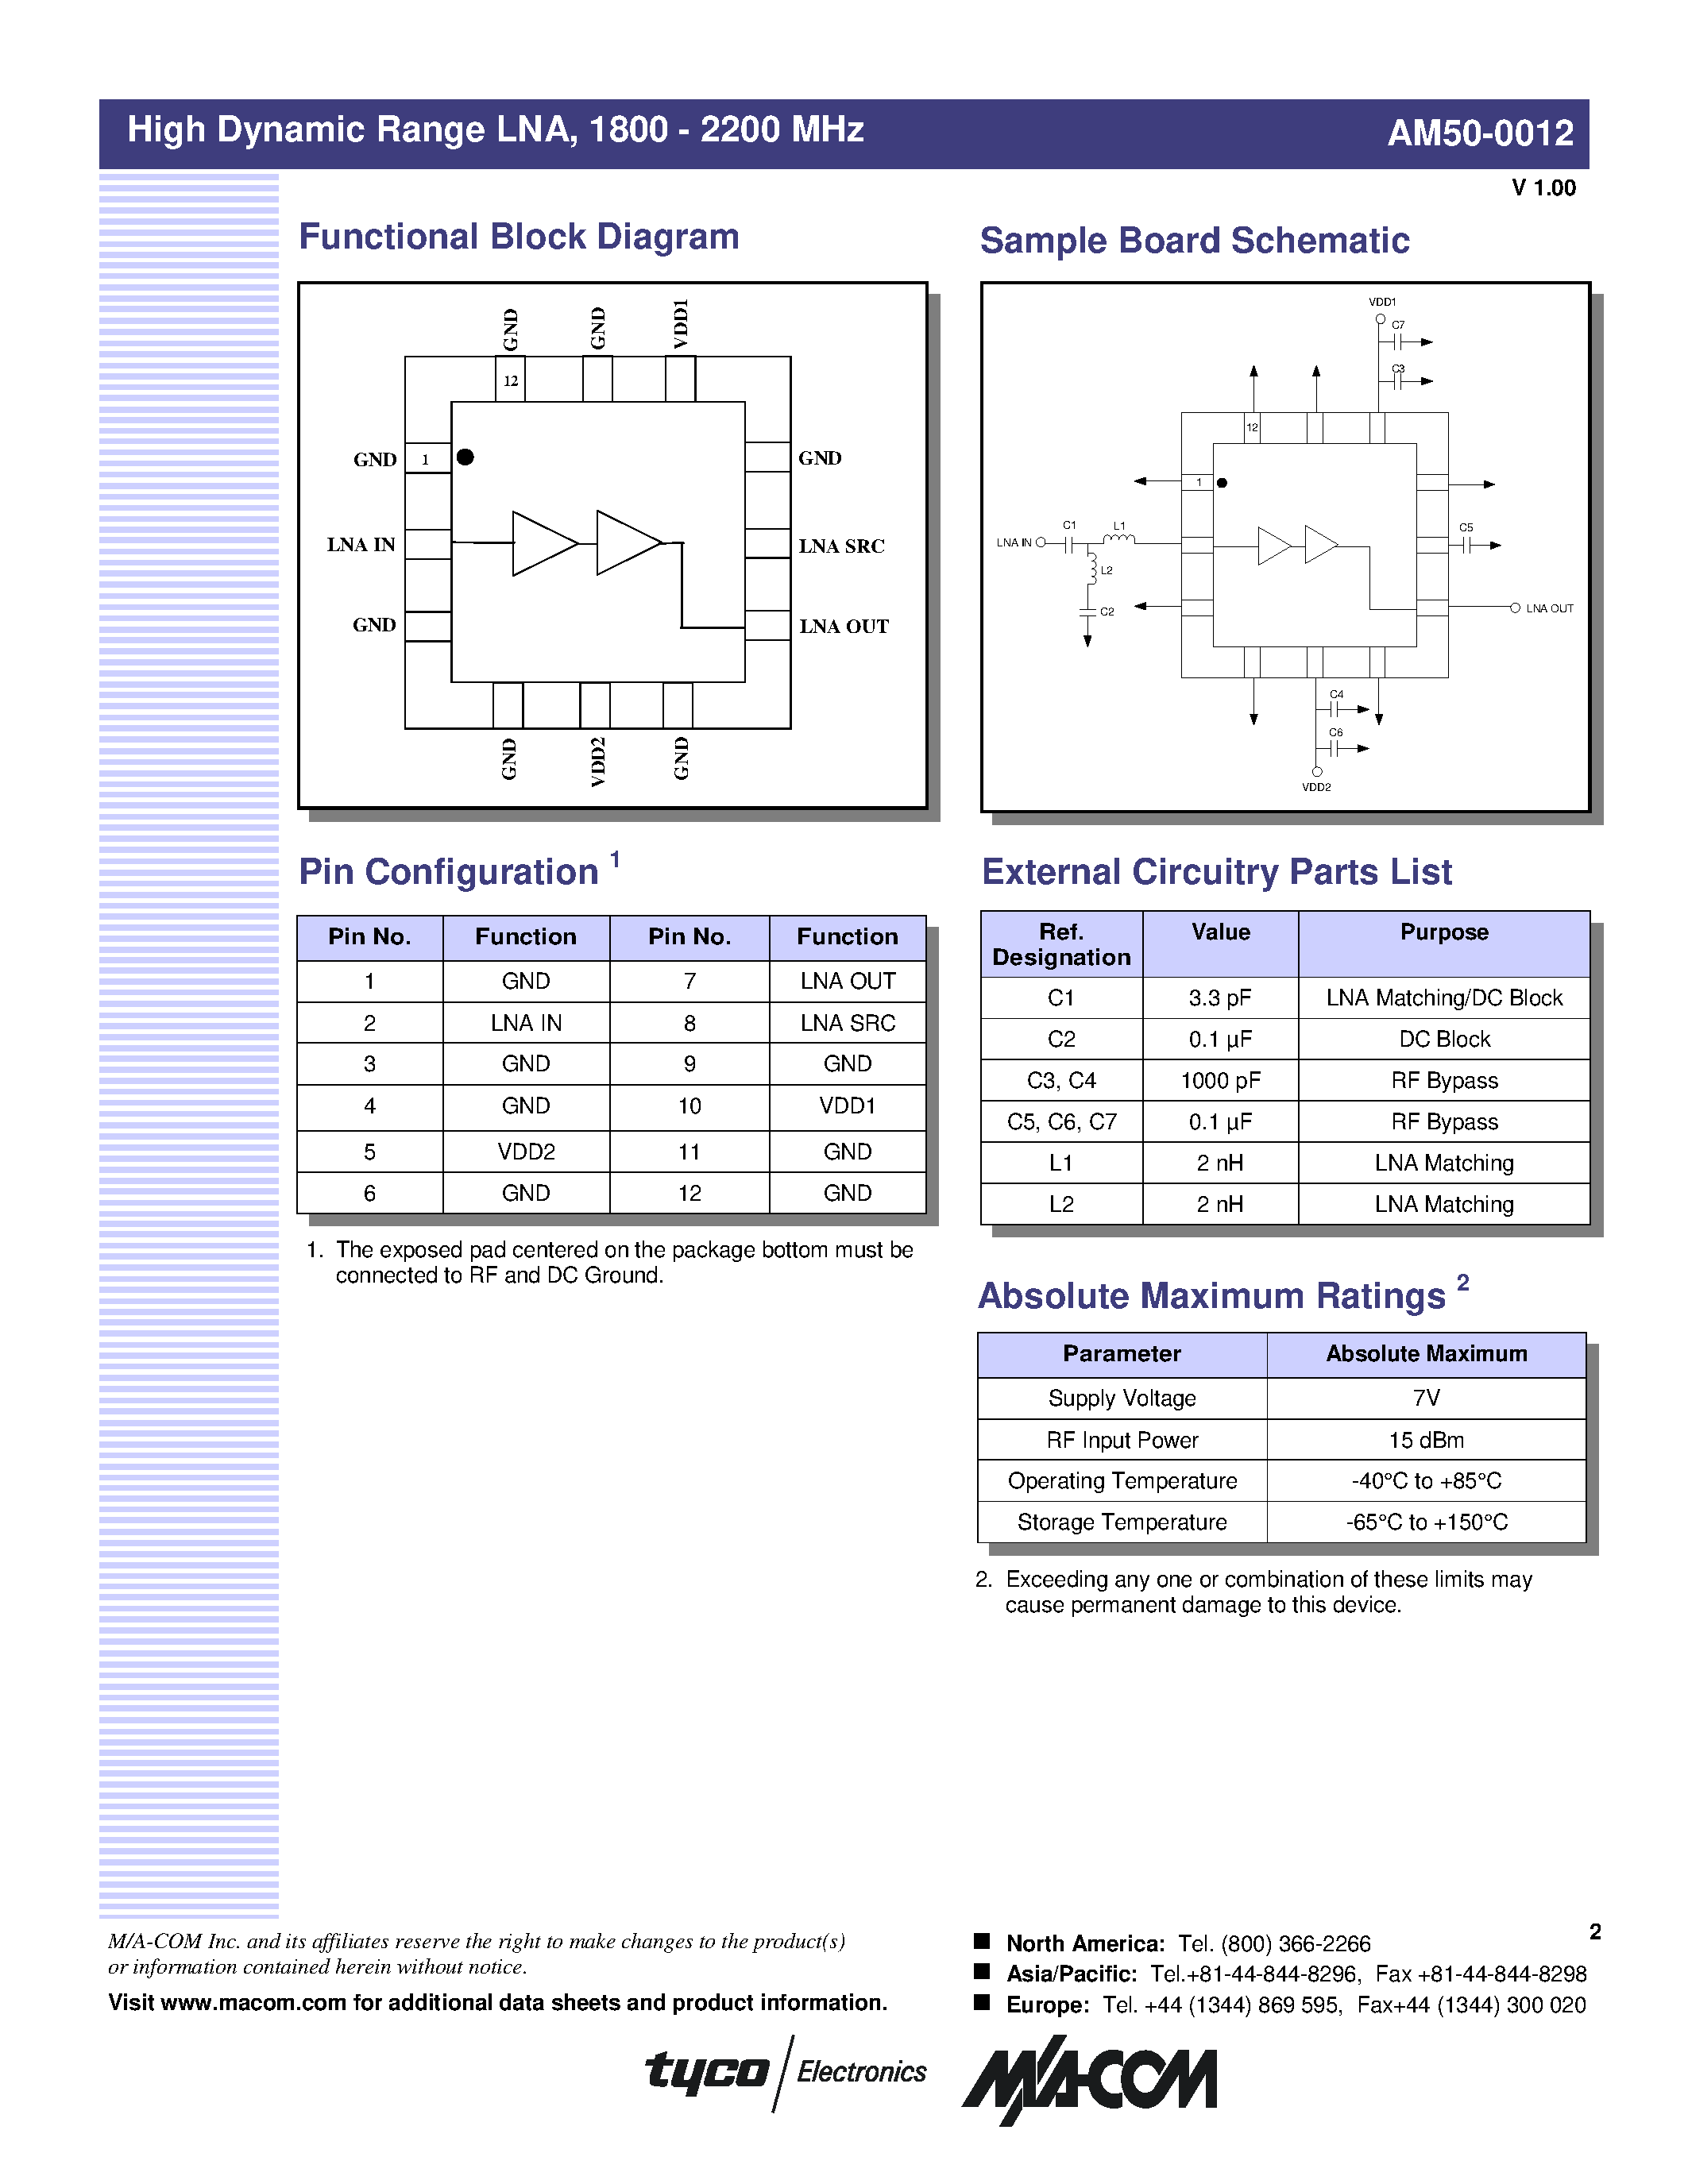 Datasheet AM50-0012 - High Dynamic Range Low Noise Amplifier page 2